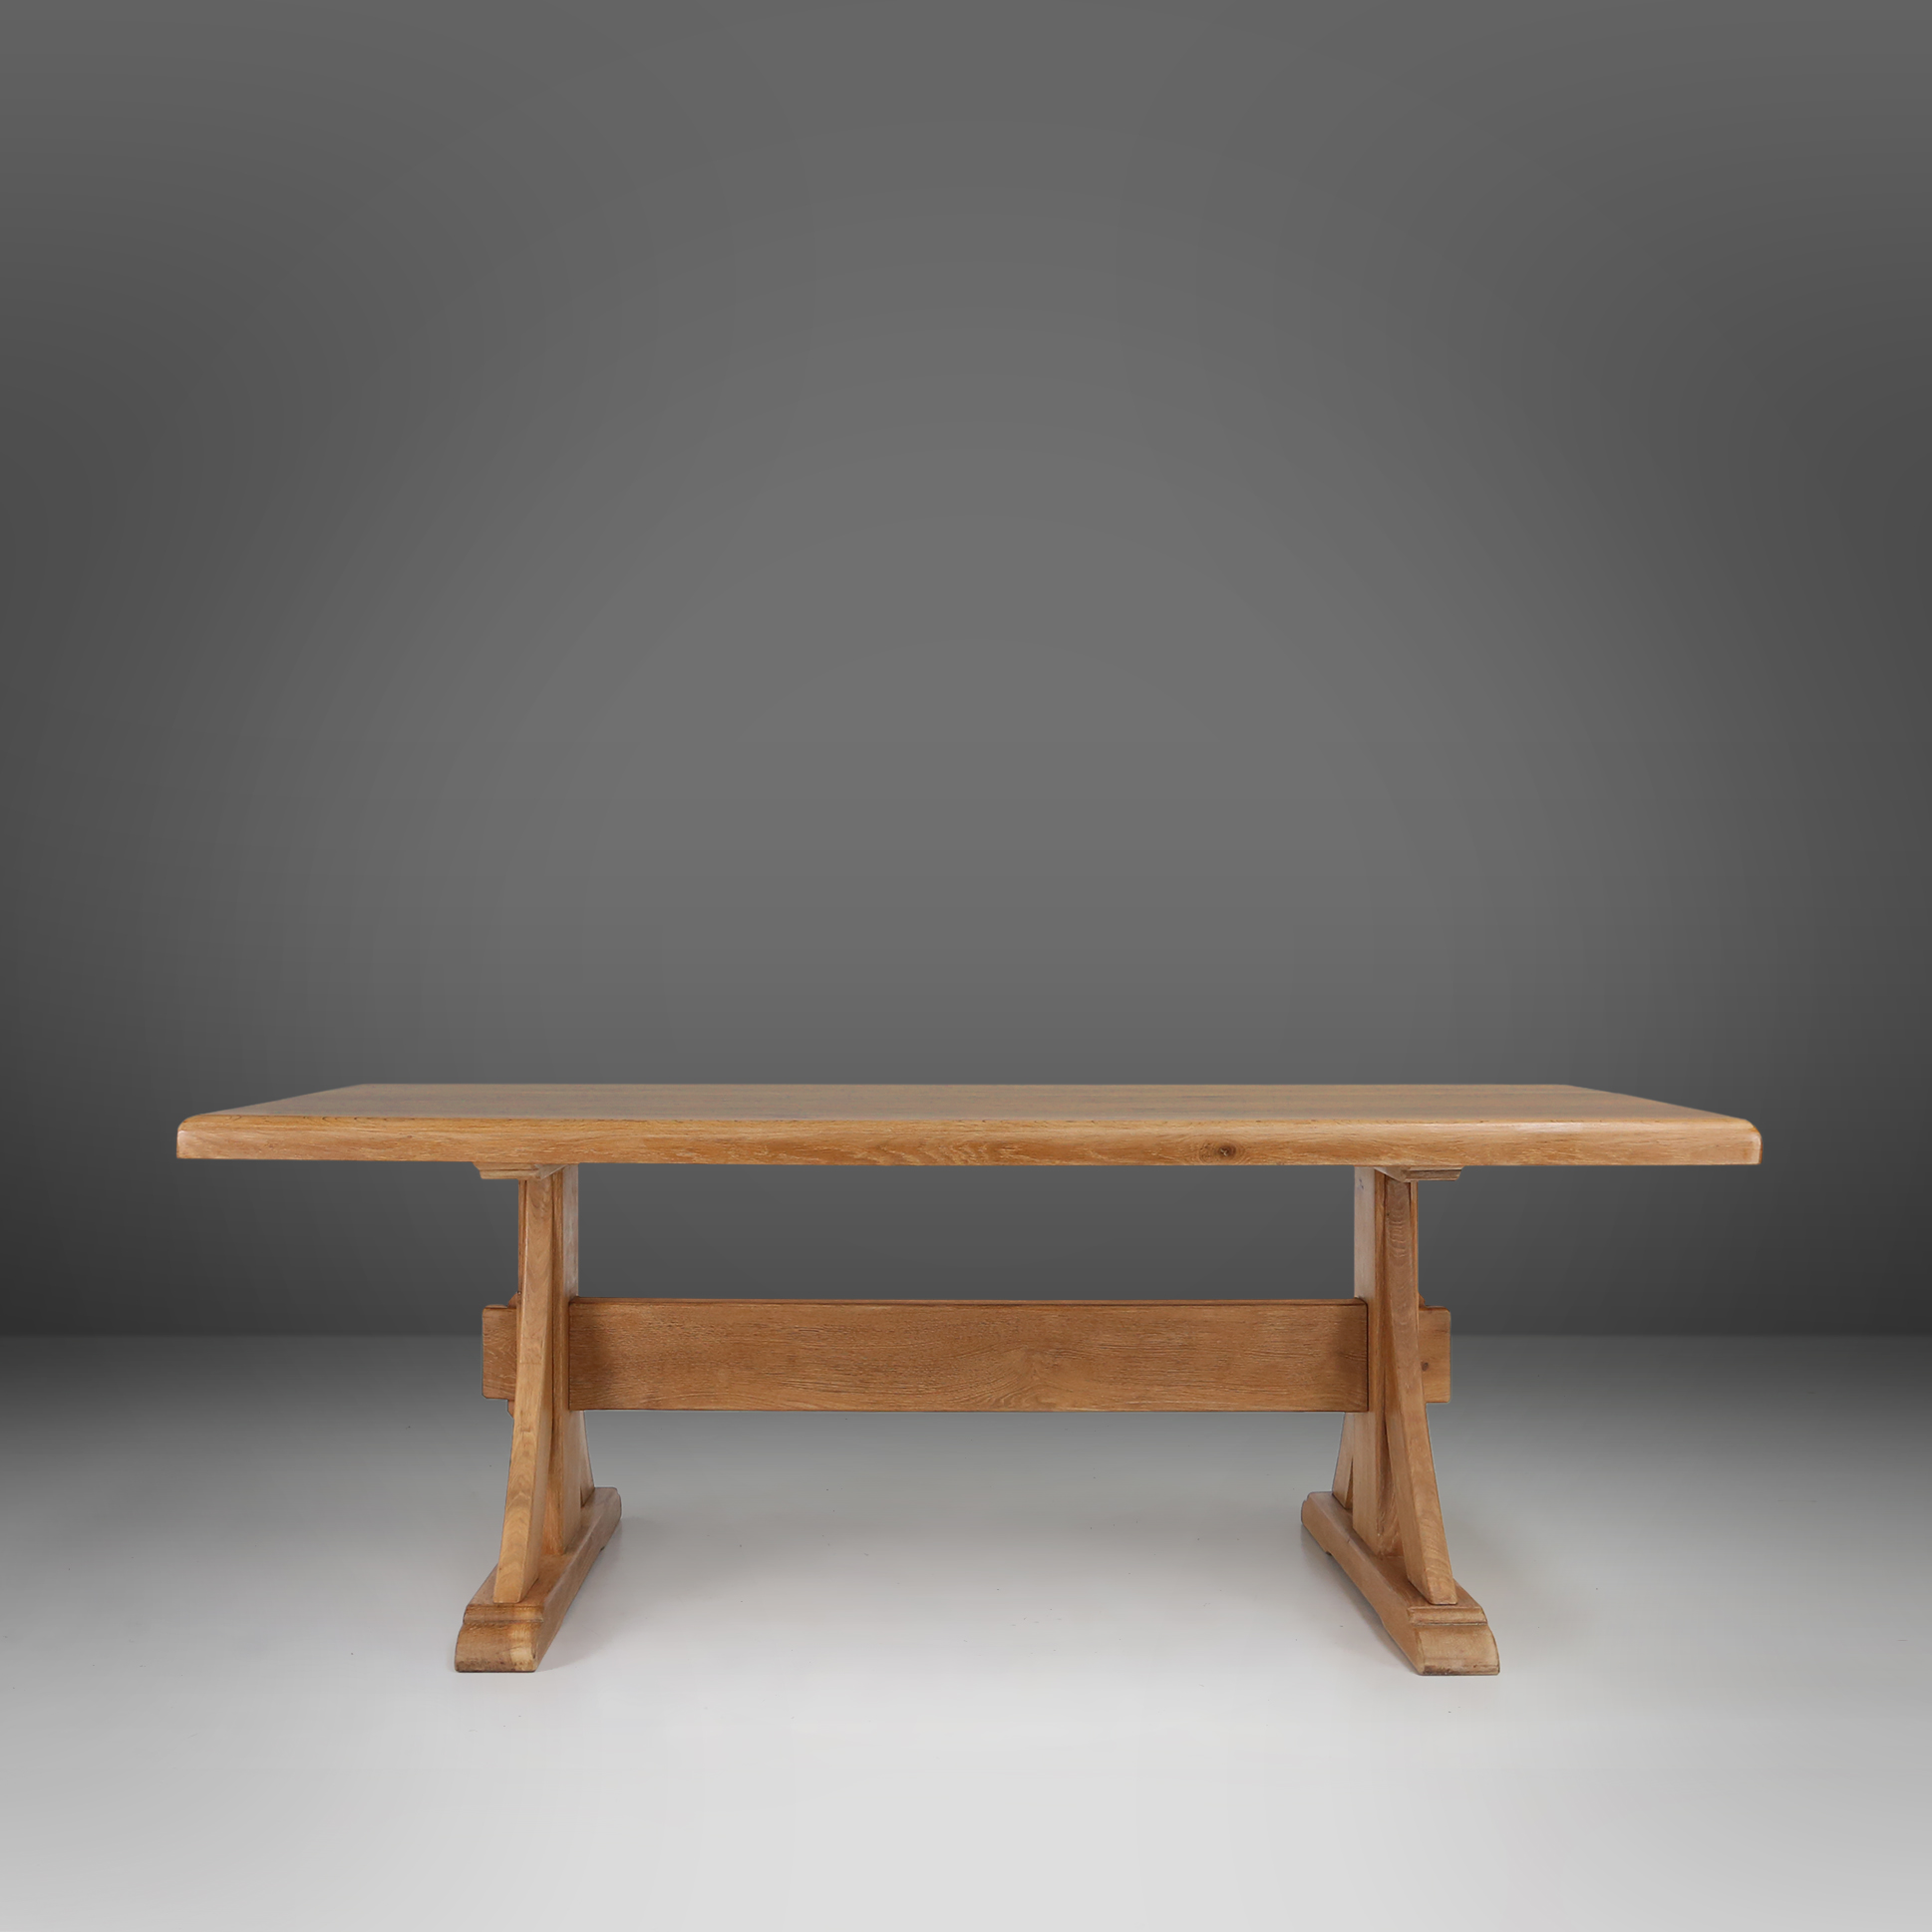 Timeless Mid-century rustic oak table, France, 1950sthumbnail